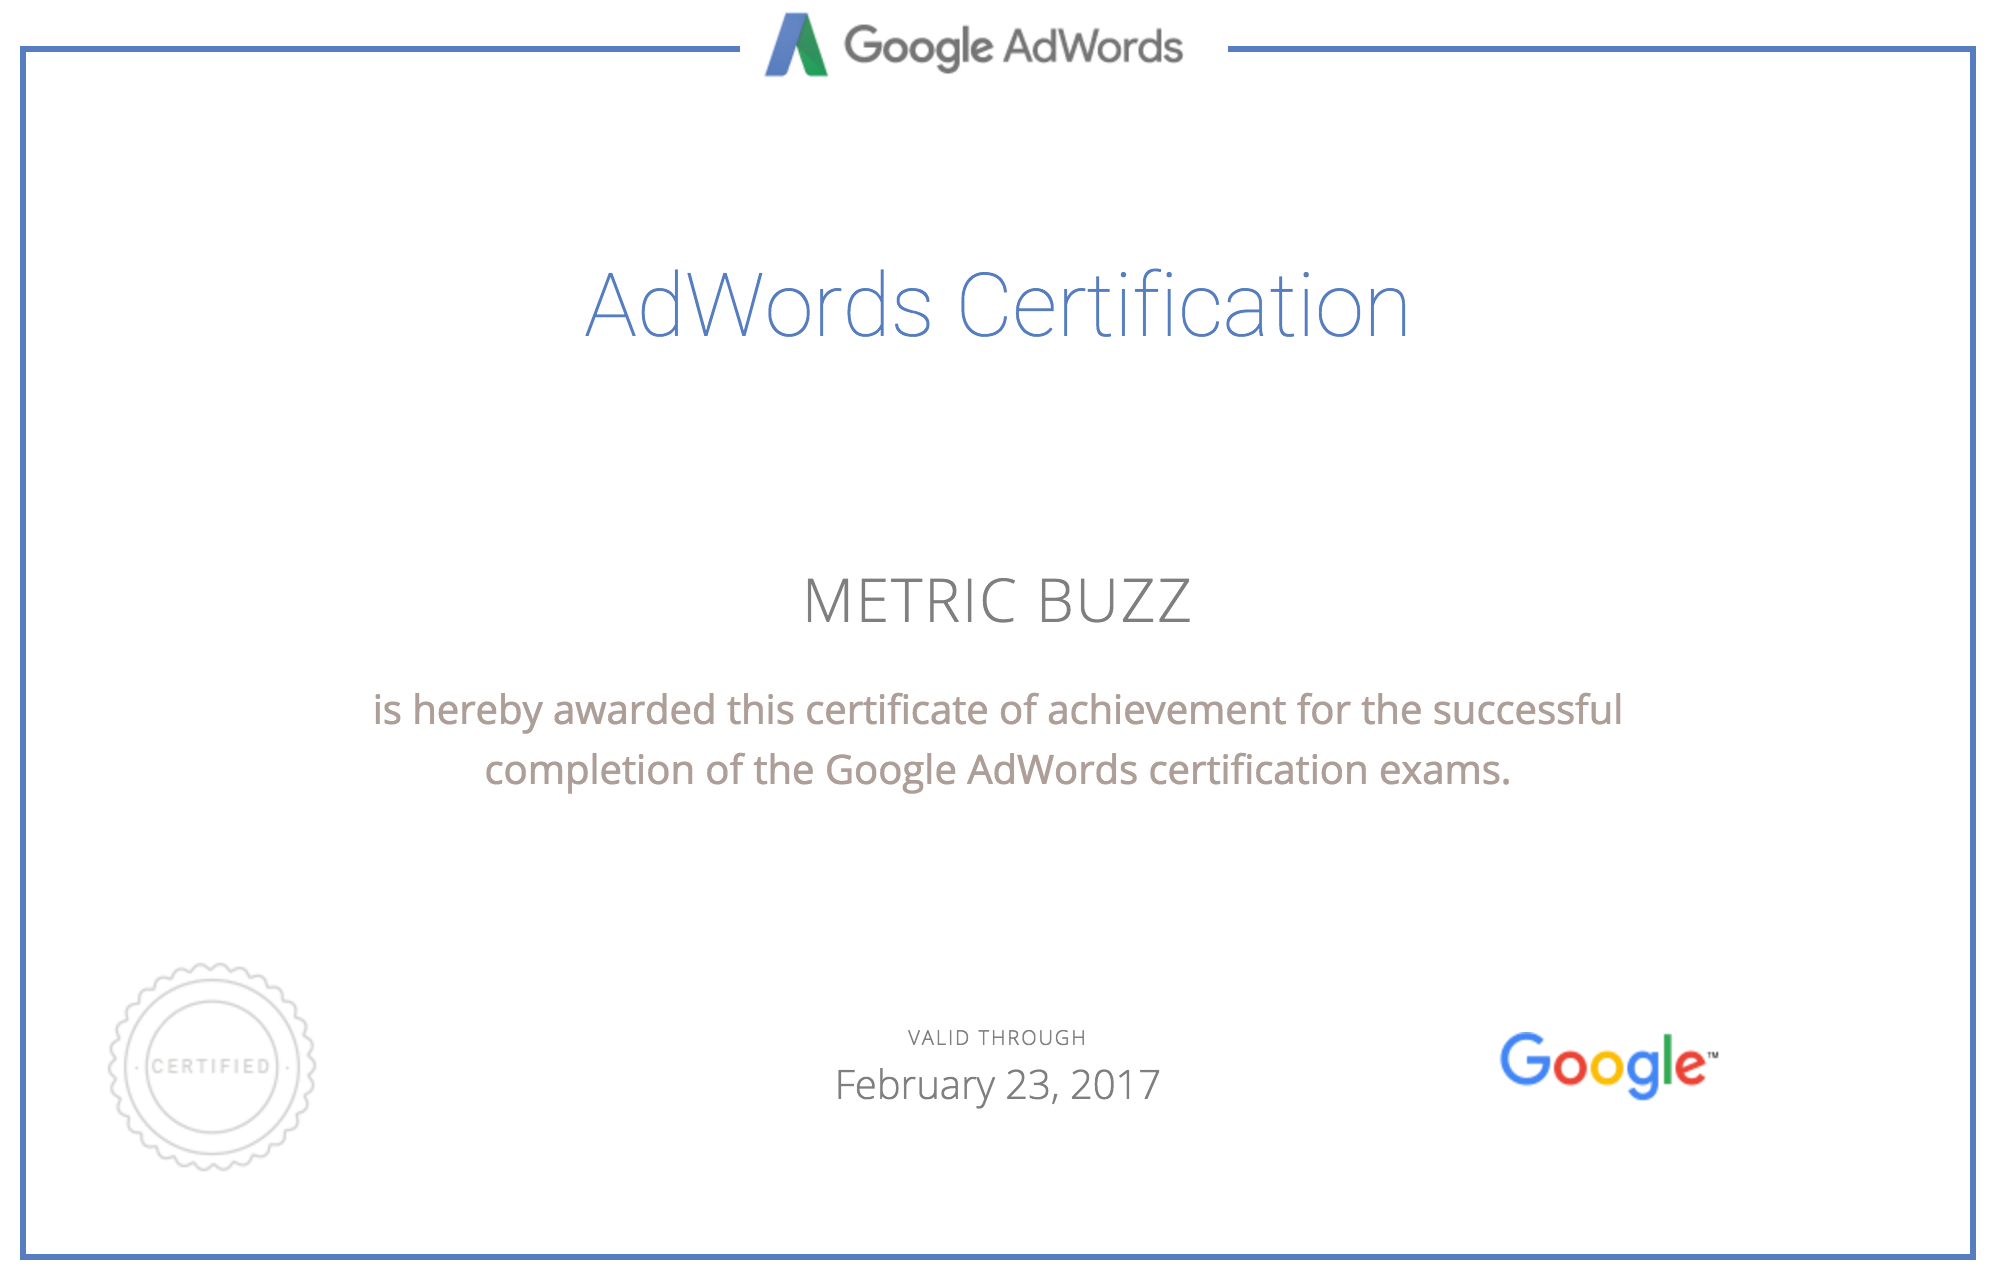 metricbuzz.com Google Adwords certificate